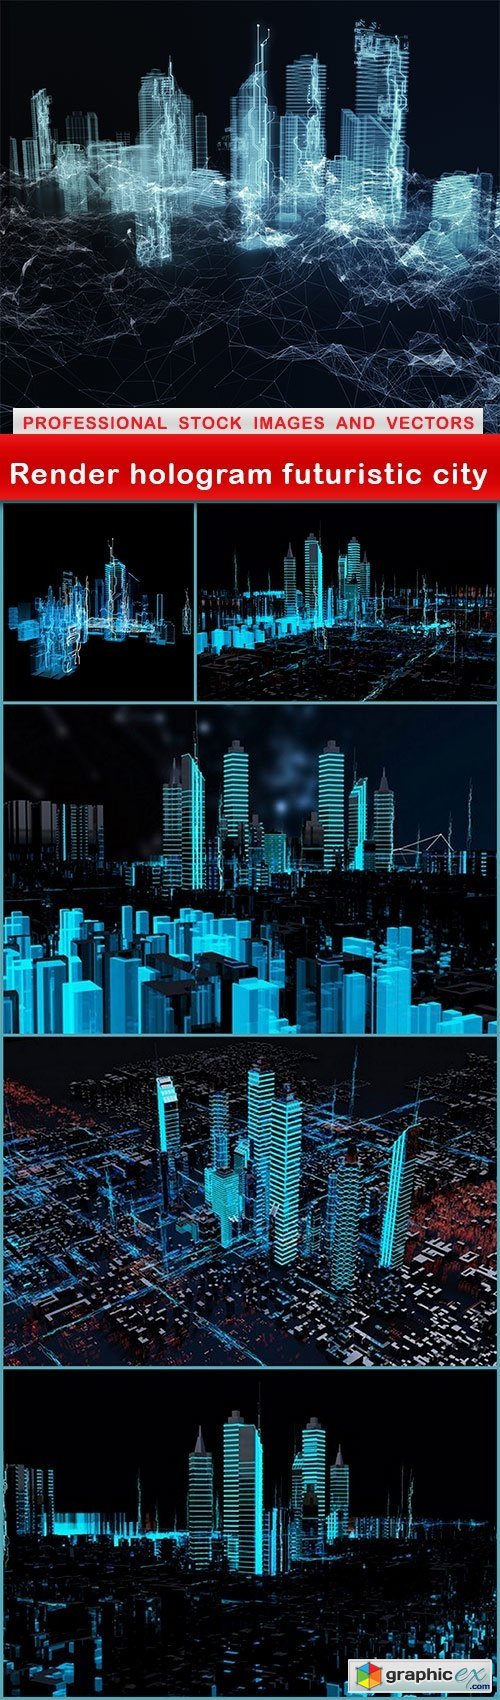 Render hologram futuristic city - 6 UHQ JPEG